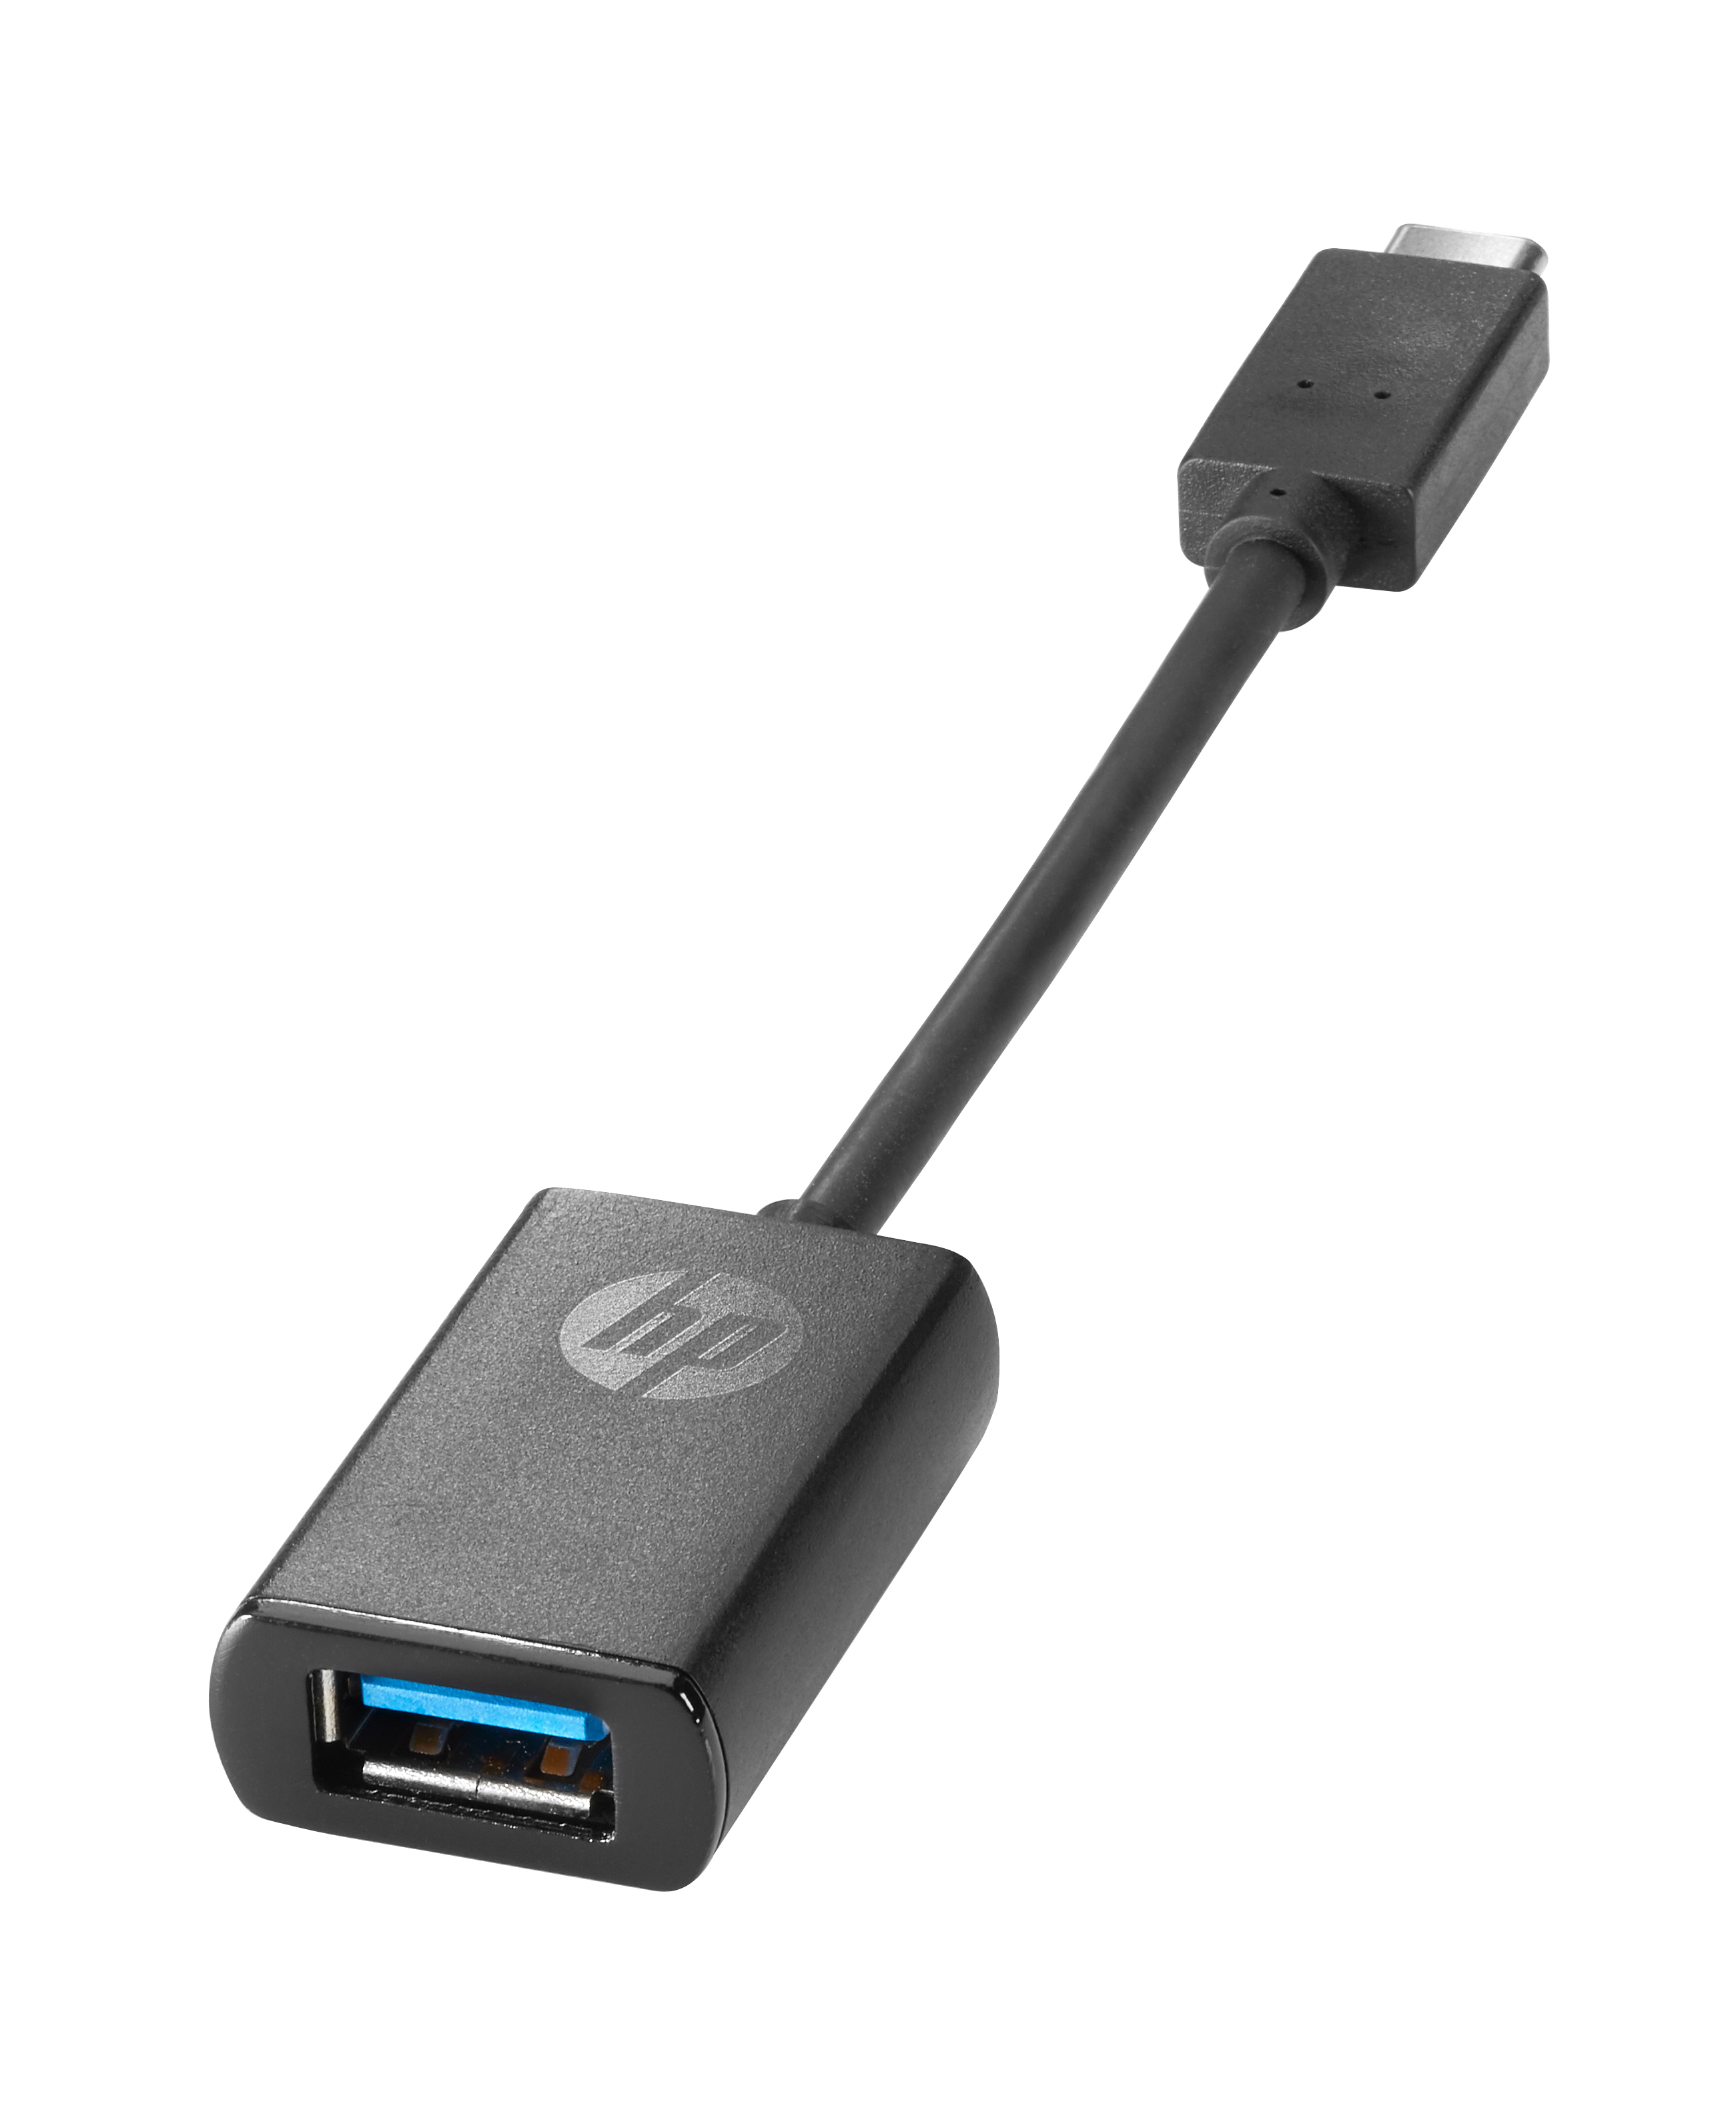  USB-C to USB 3.0 Adapter